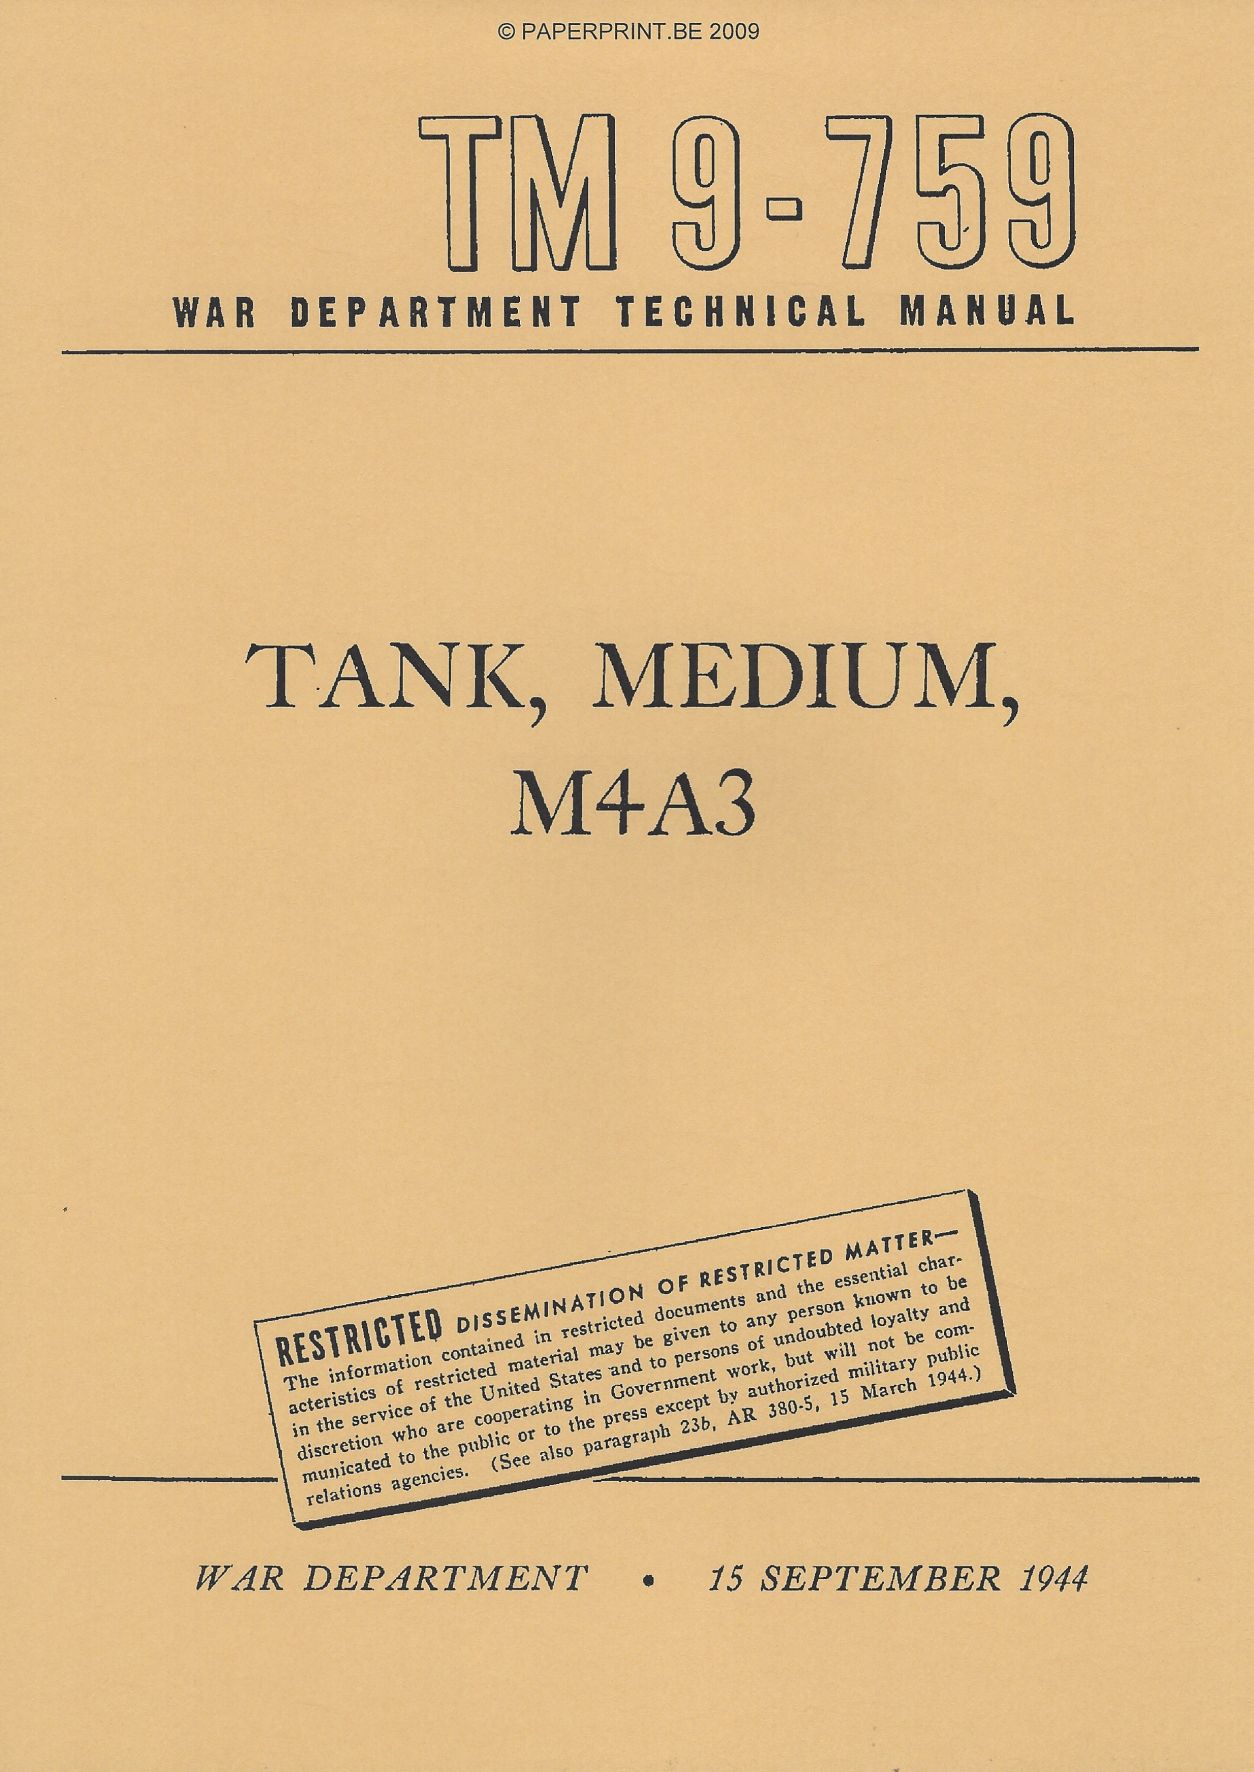 TM 9-759 US TANK, MEDIUM, M4A3